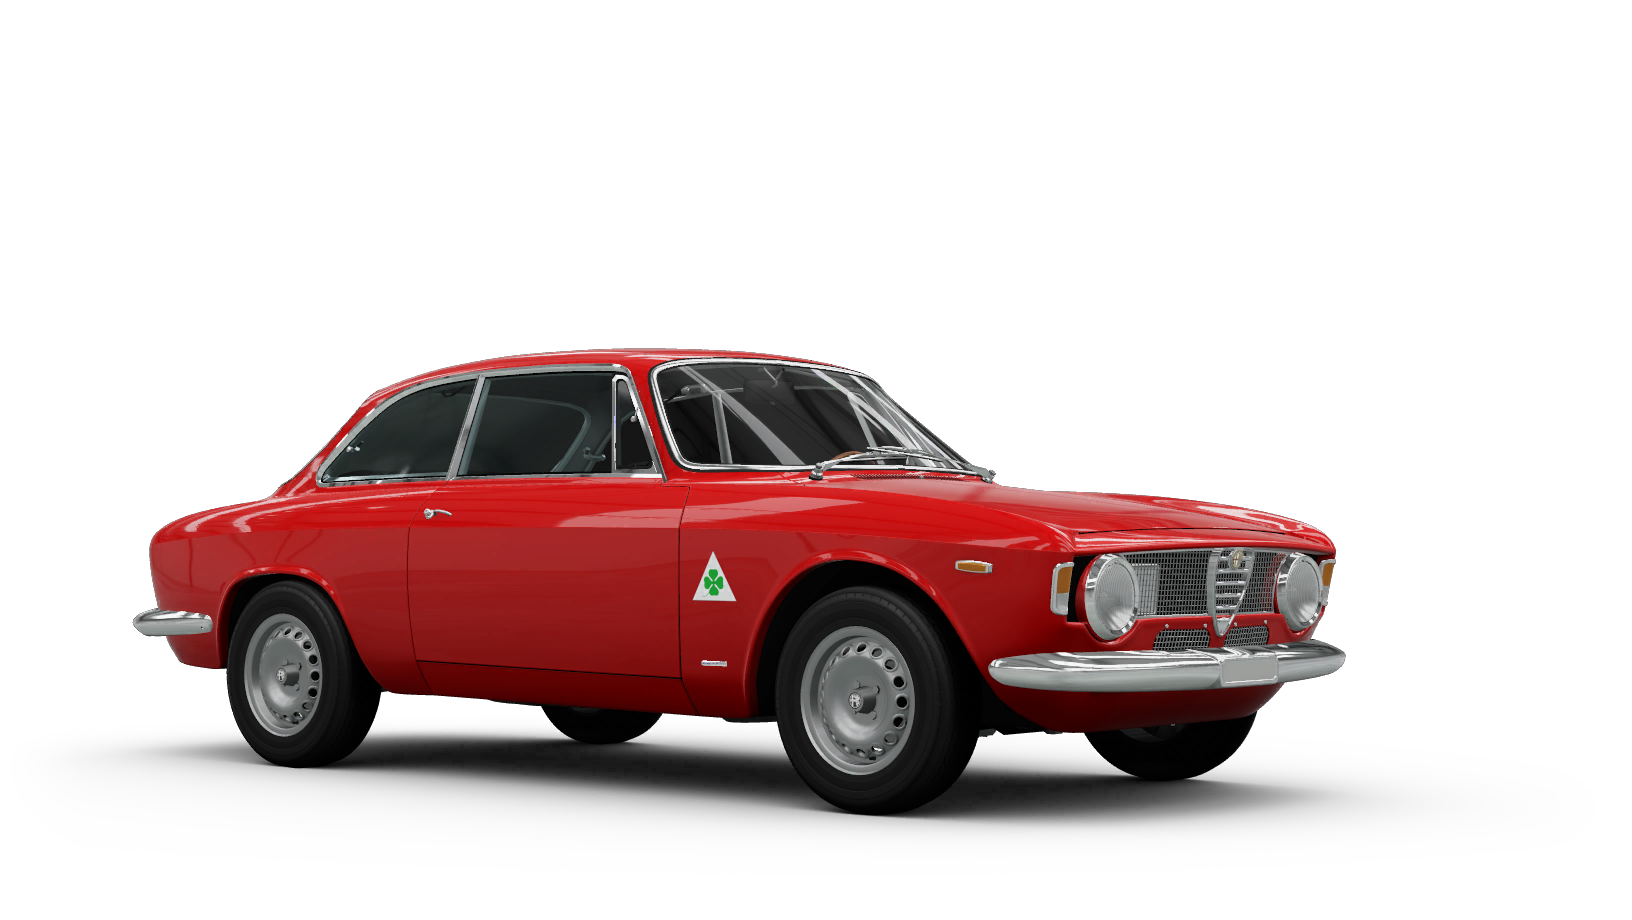 Alfa Romeo Giulietta (1977) - Wikipedia